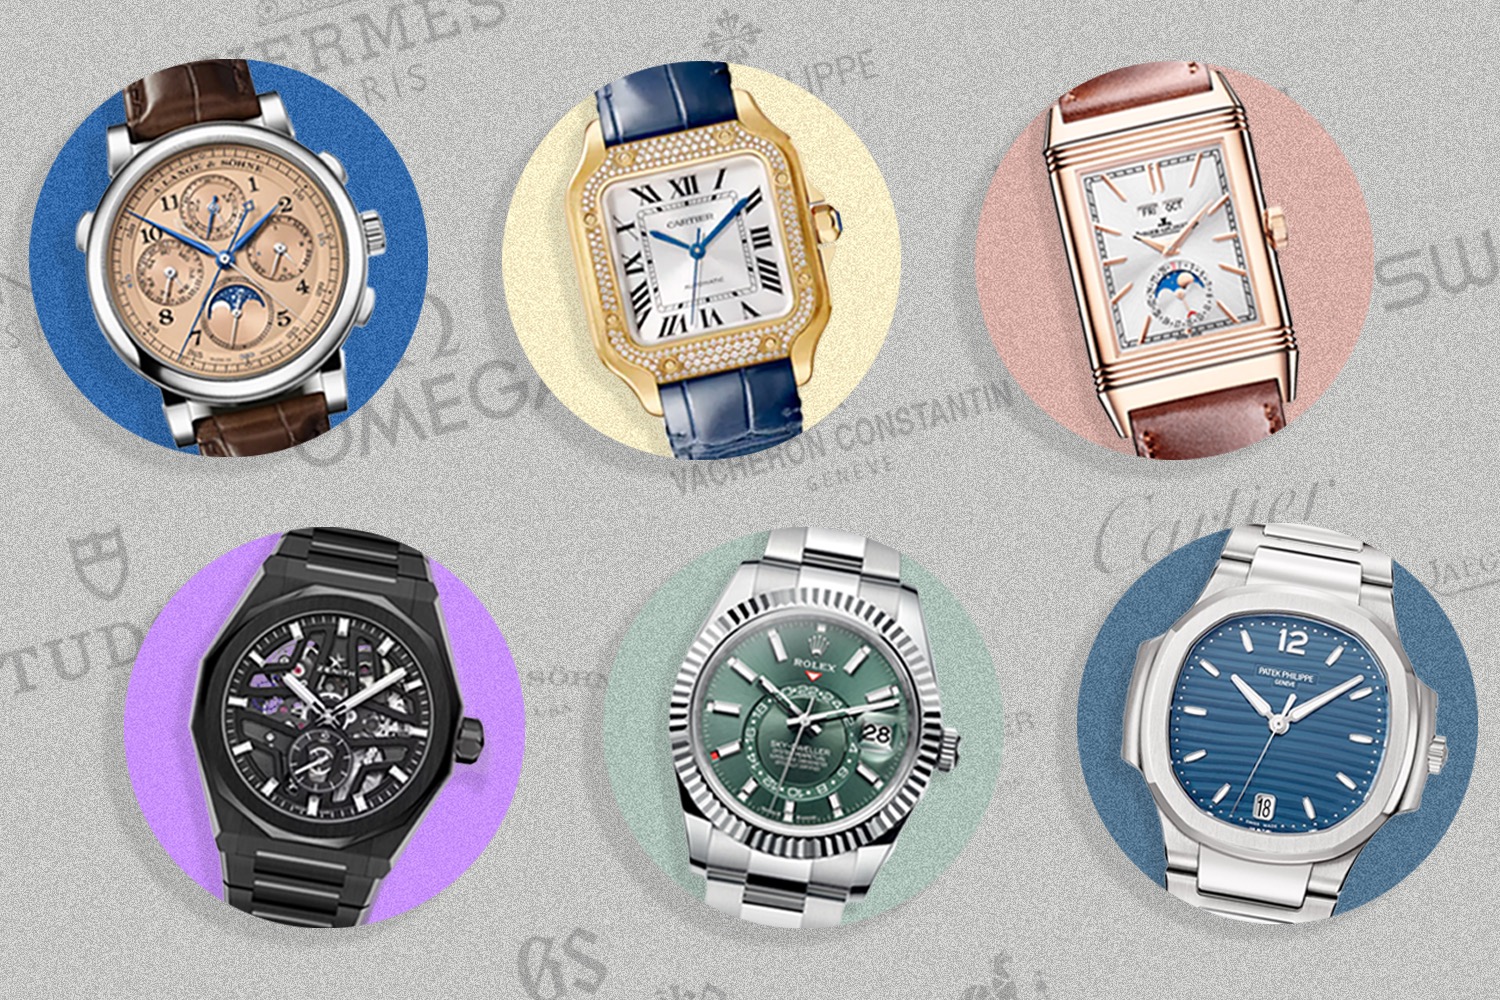 28 Watch brands every person should know: Rolex, Casio, Patek